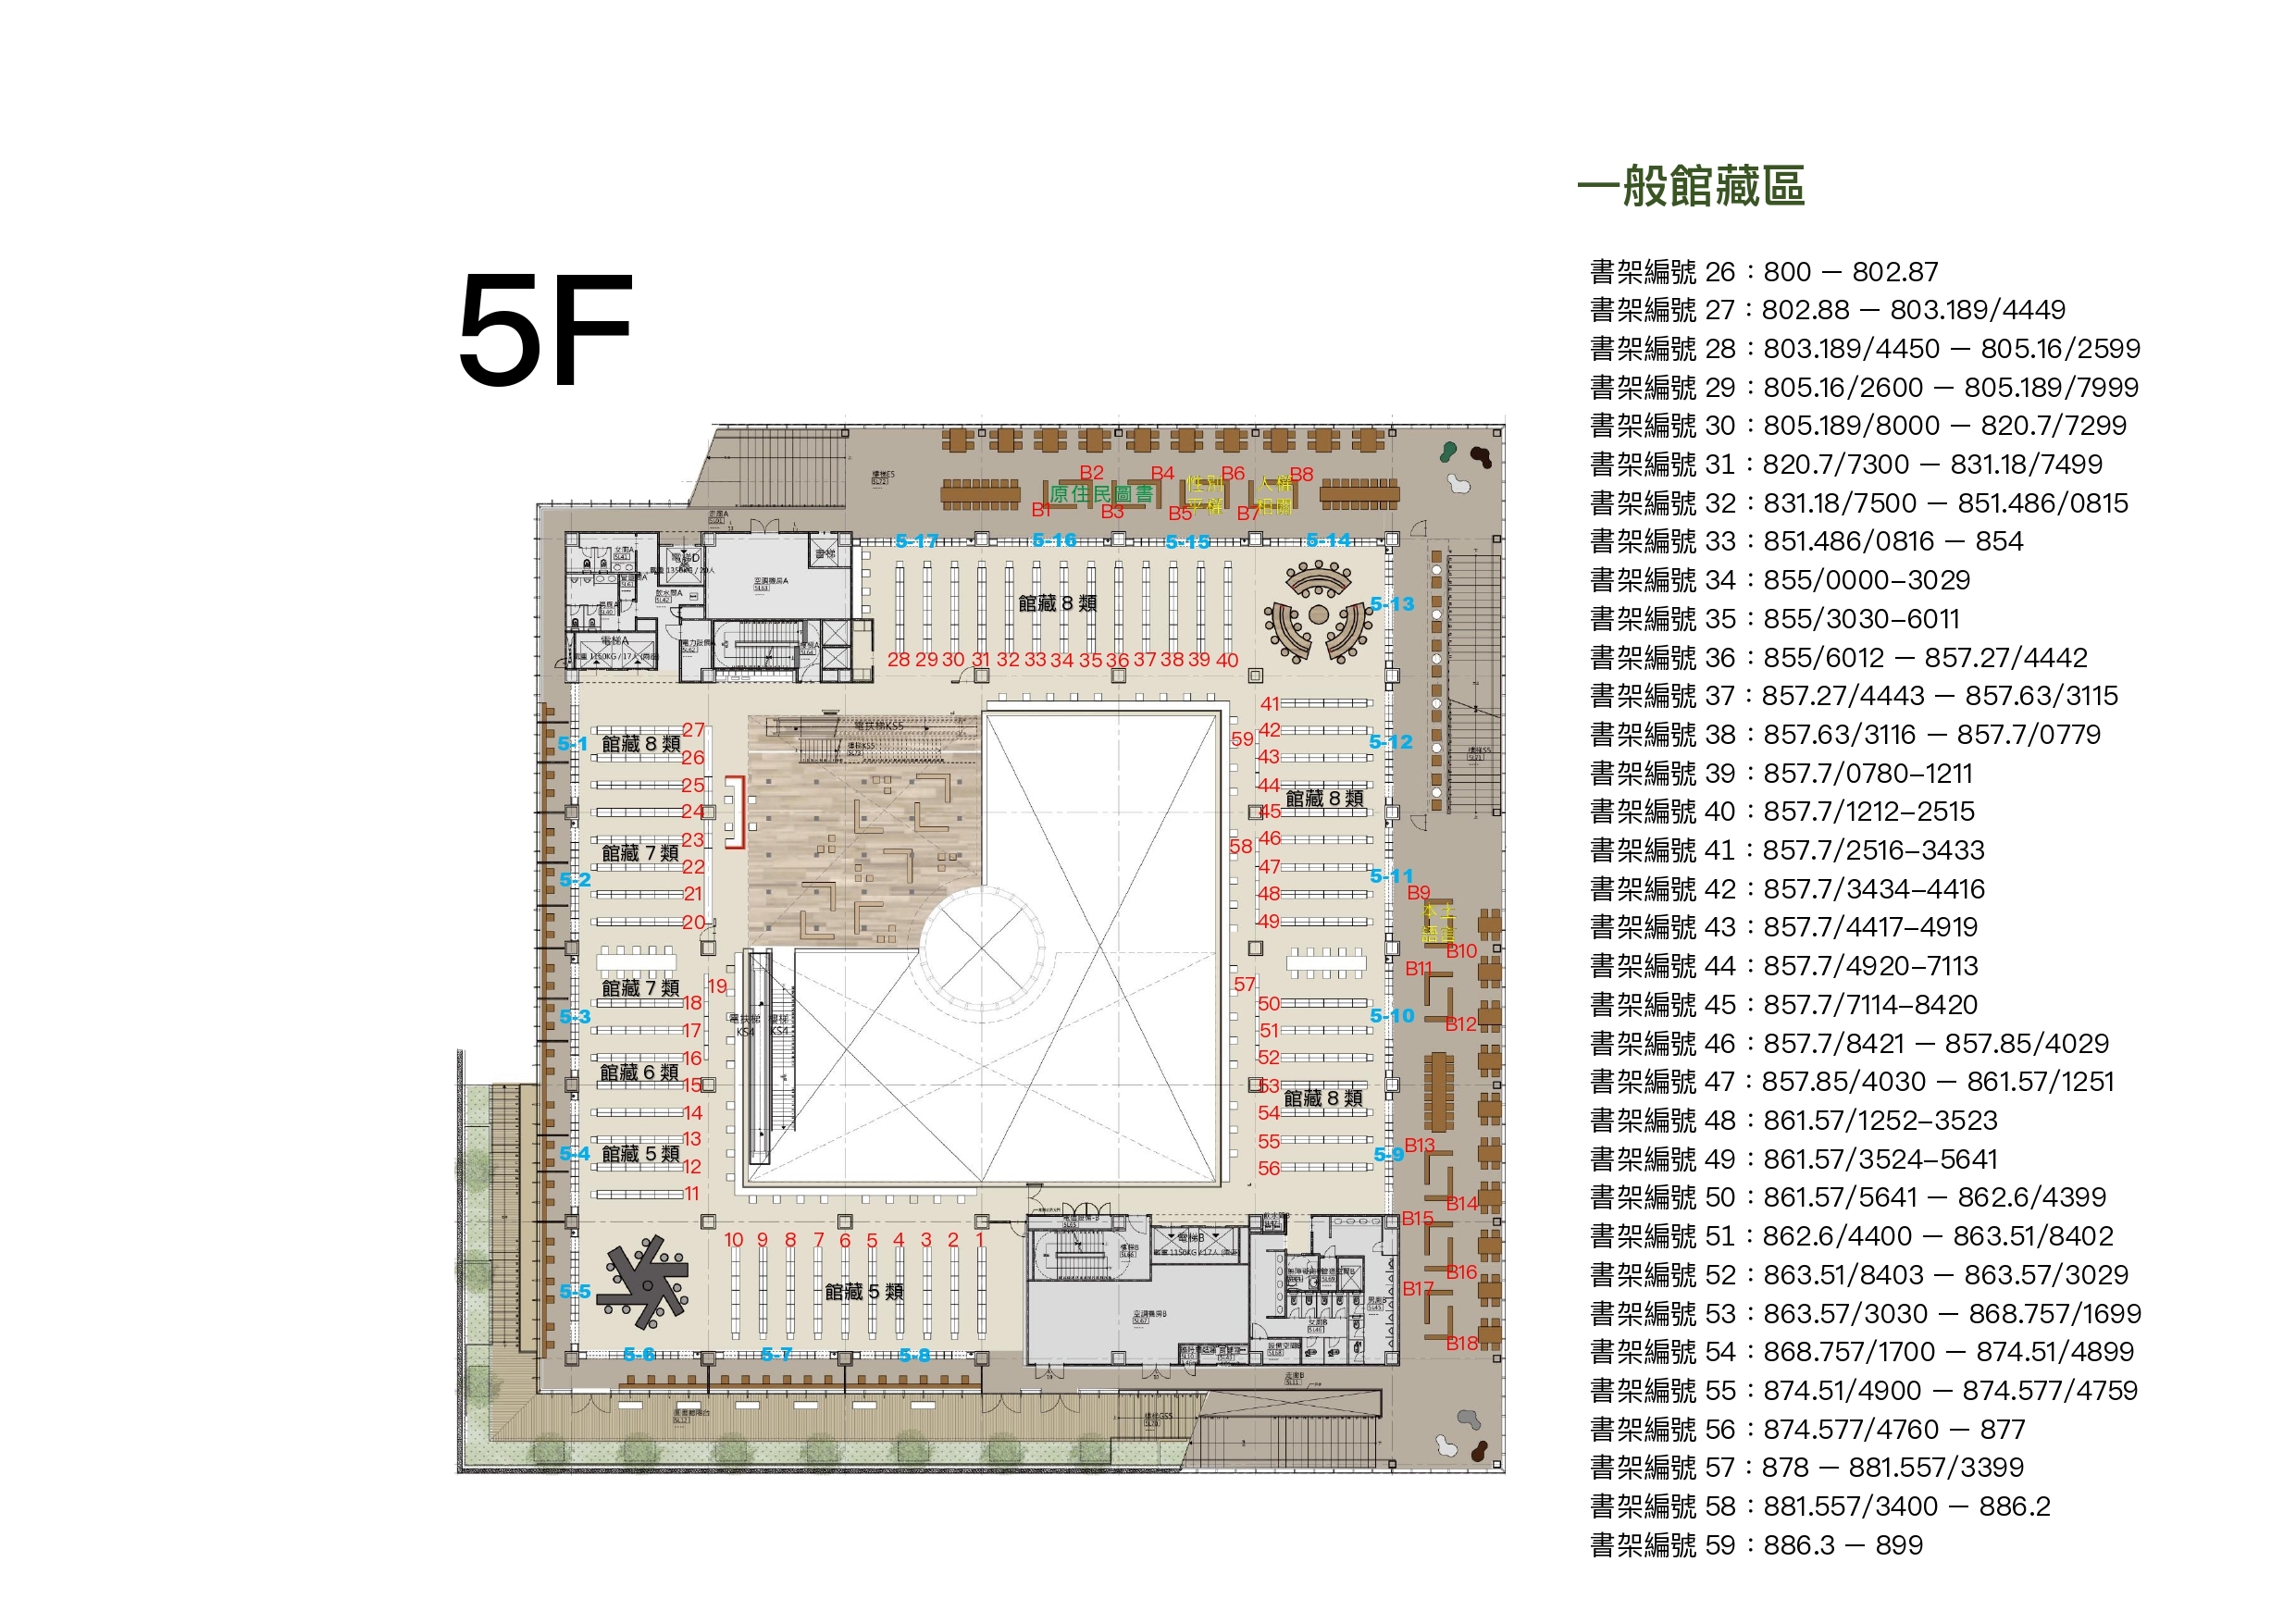 5F 一般館藏區平面圖